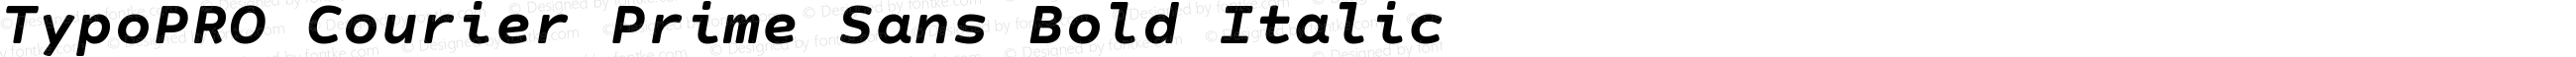 TypoPRO Courier Prime Sans Bold Italic